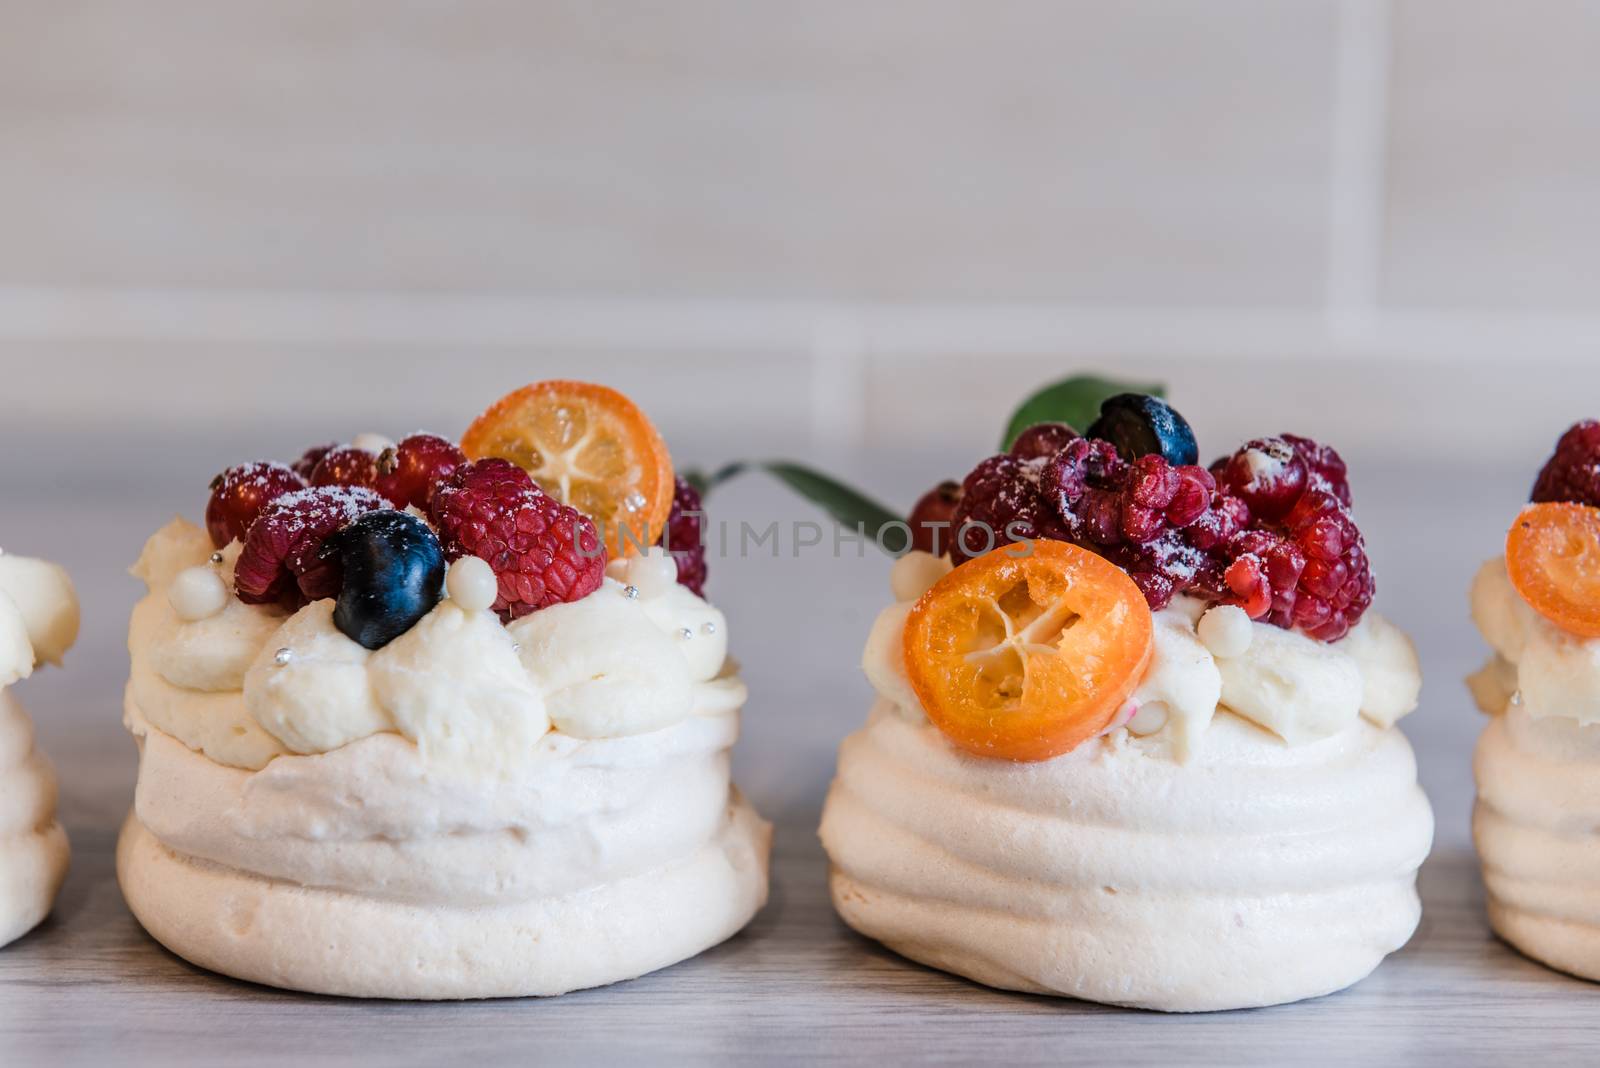 Pavlova meringue desert cake with cream and small fruits